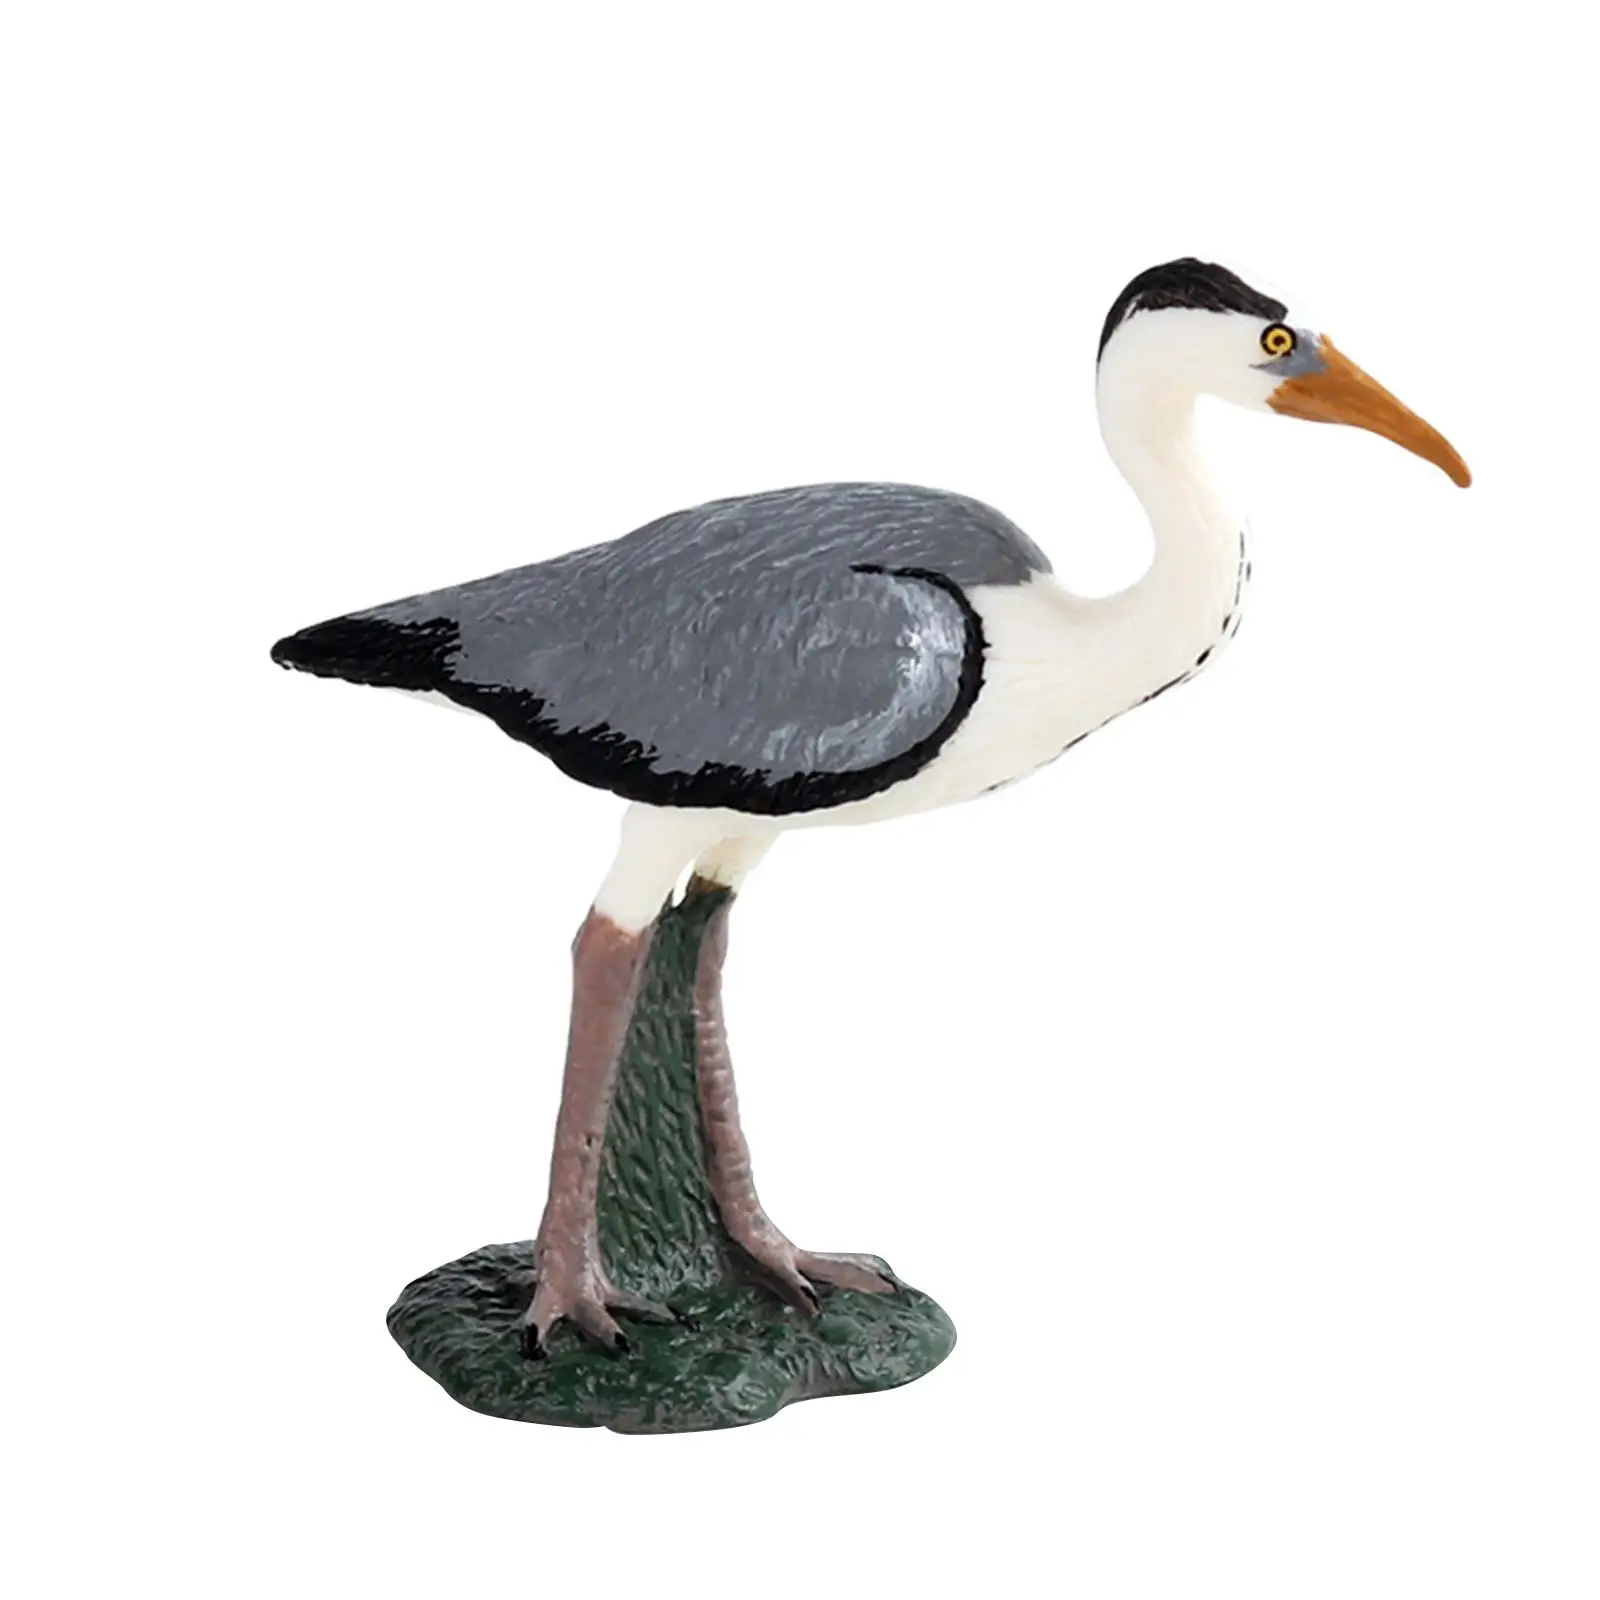 Simulation Bird Statue Sculpture Bird Figurines Animals Birds Model DIY Crafts for Lawn Home Outdoor Decor Ornament